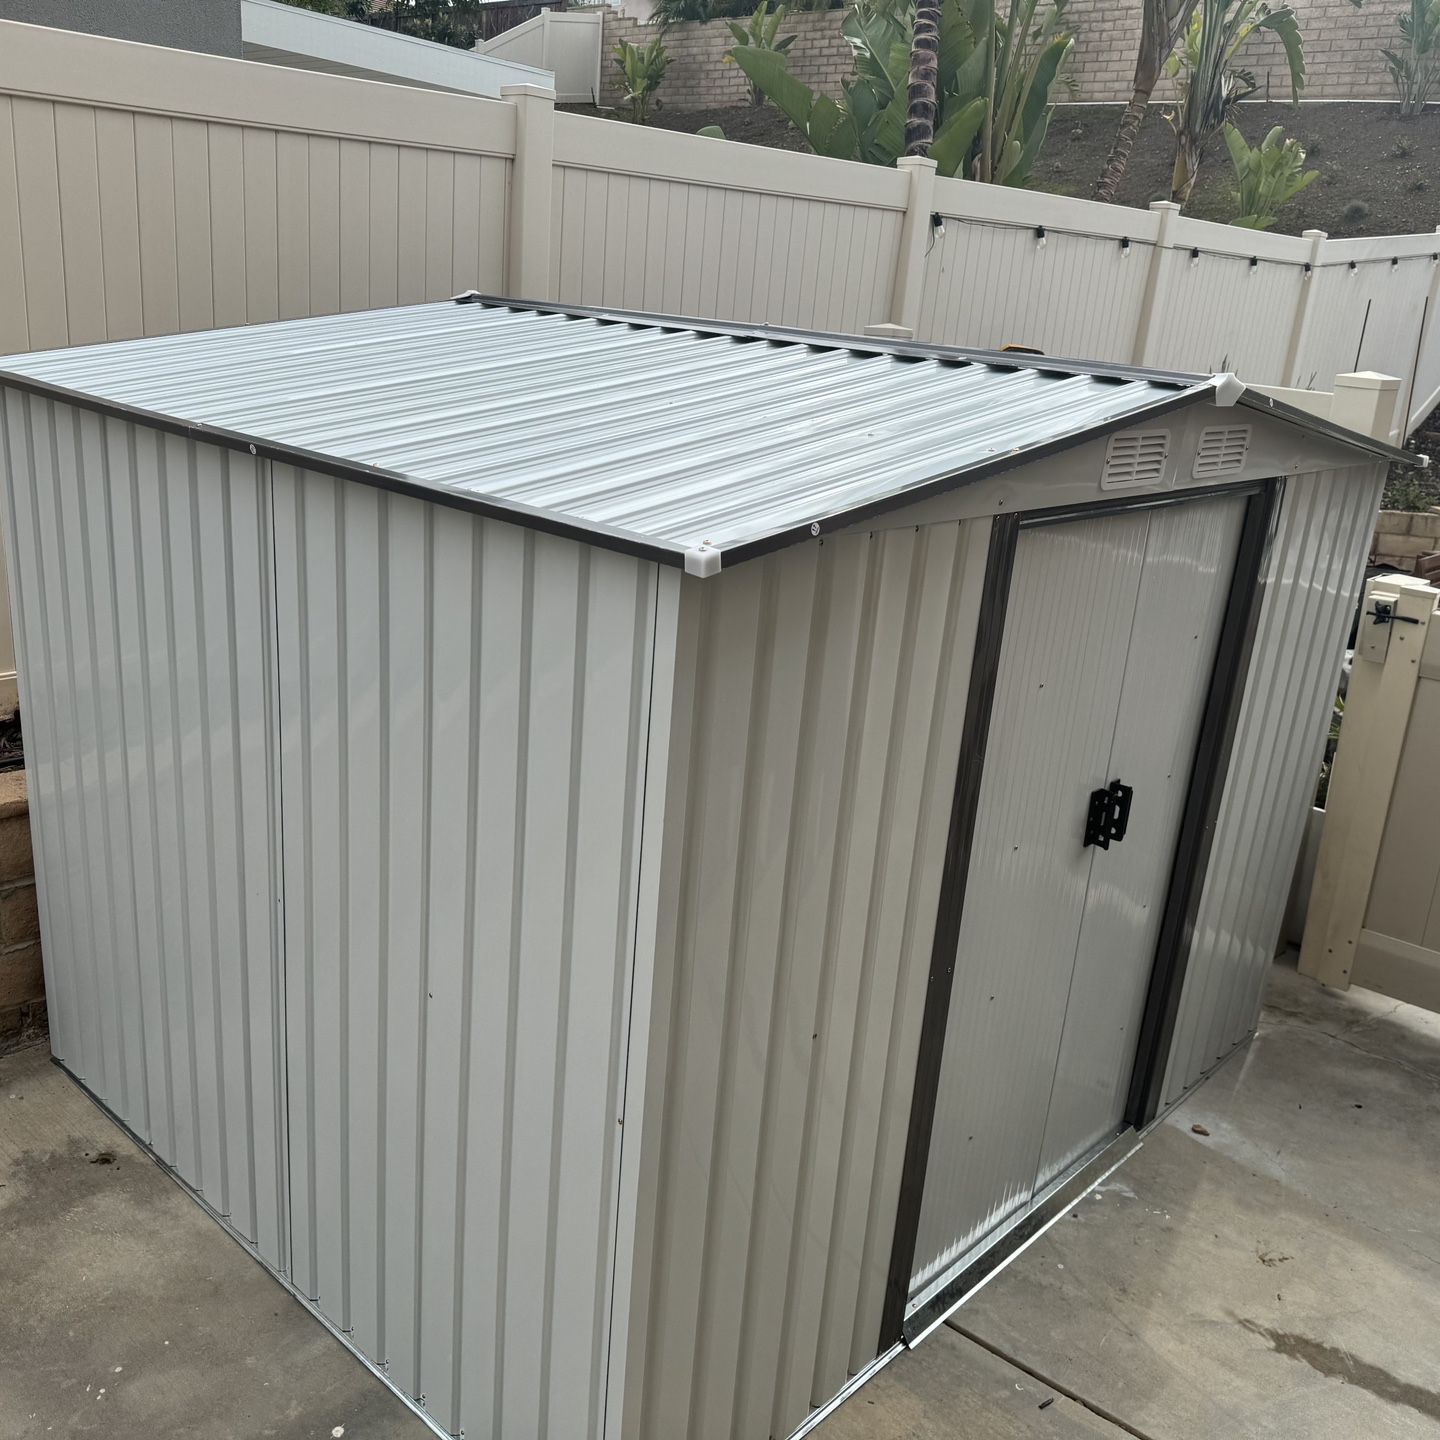 (New in box need assemble) 6’ L x 8’ W x 6.3’ H Metal Storage Shed Outdoor Garden Backyard 6x8 Storage 